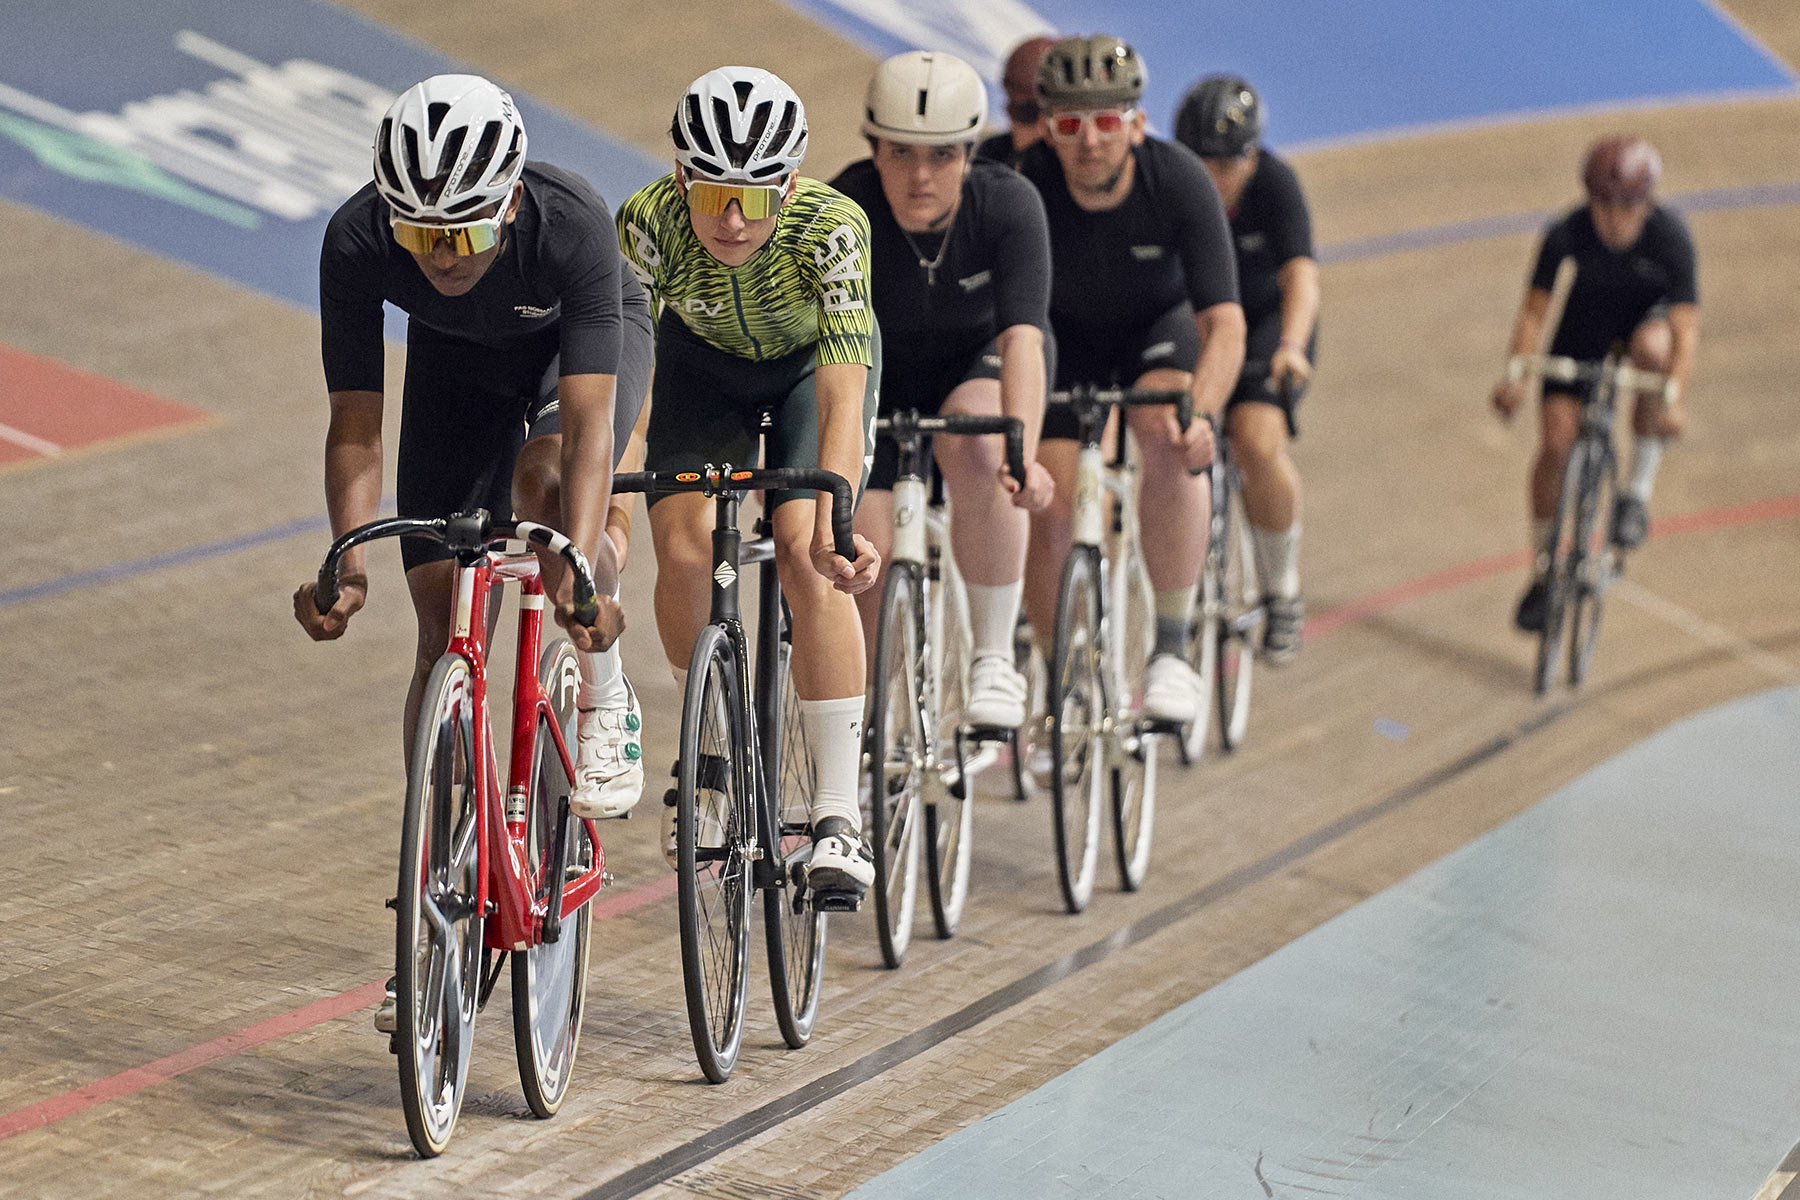 Pas Normal Studios Mechanism Pro road race cycling kit, Ballerup Super Arena velodrome training race